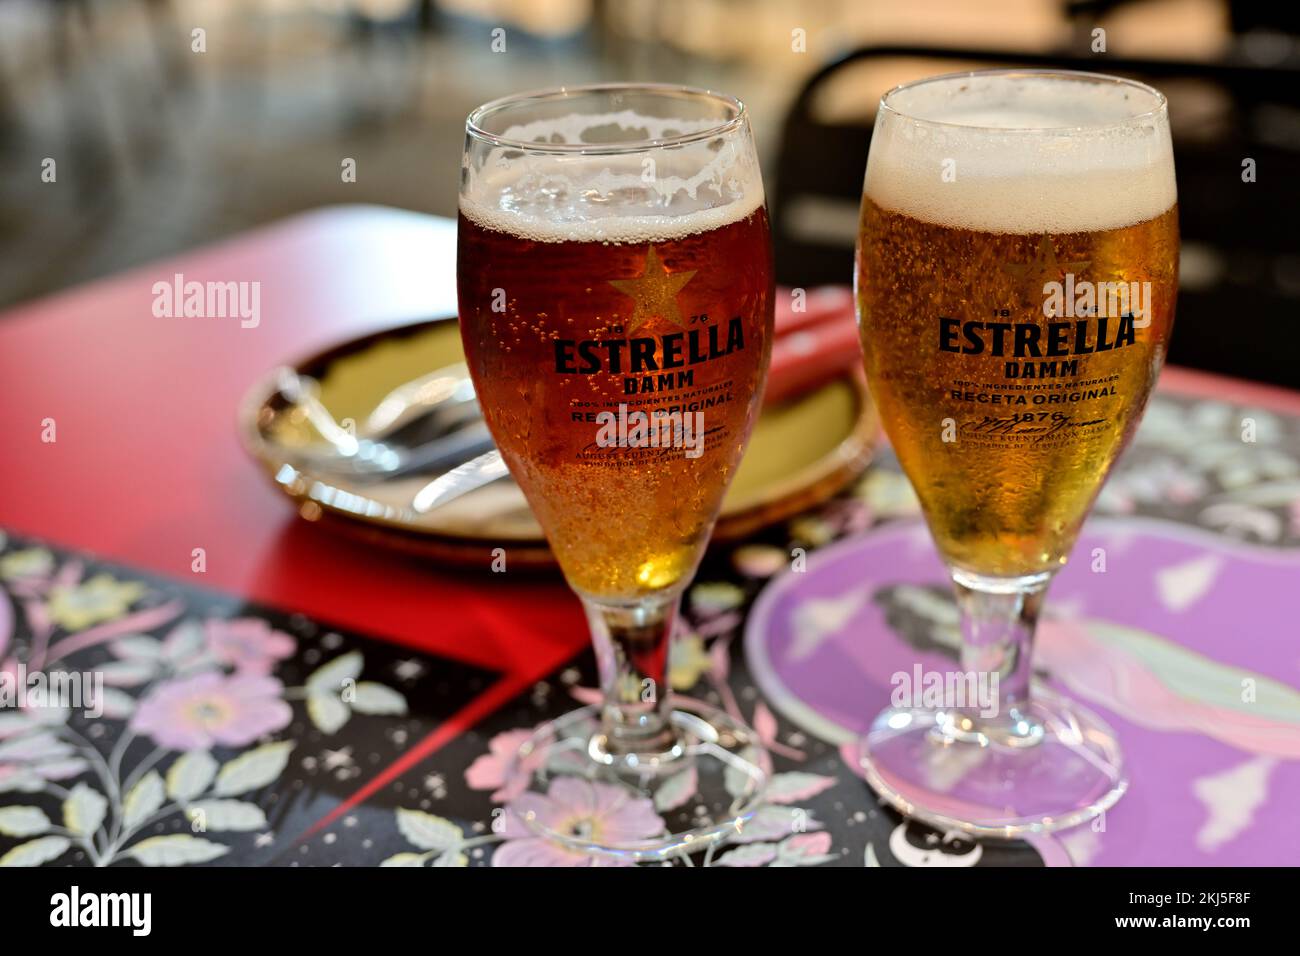 Two glasses of Estrella Damm beers Stock Photo